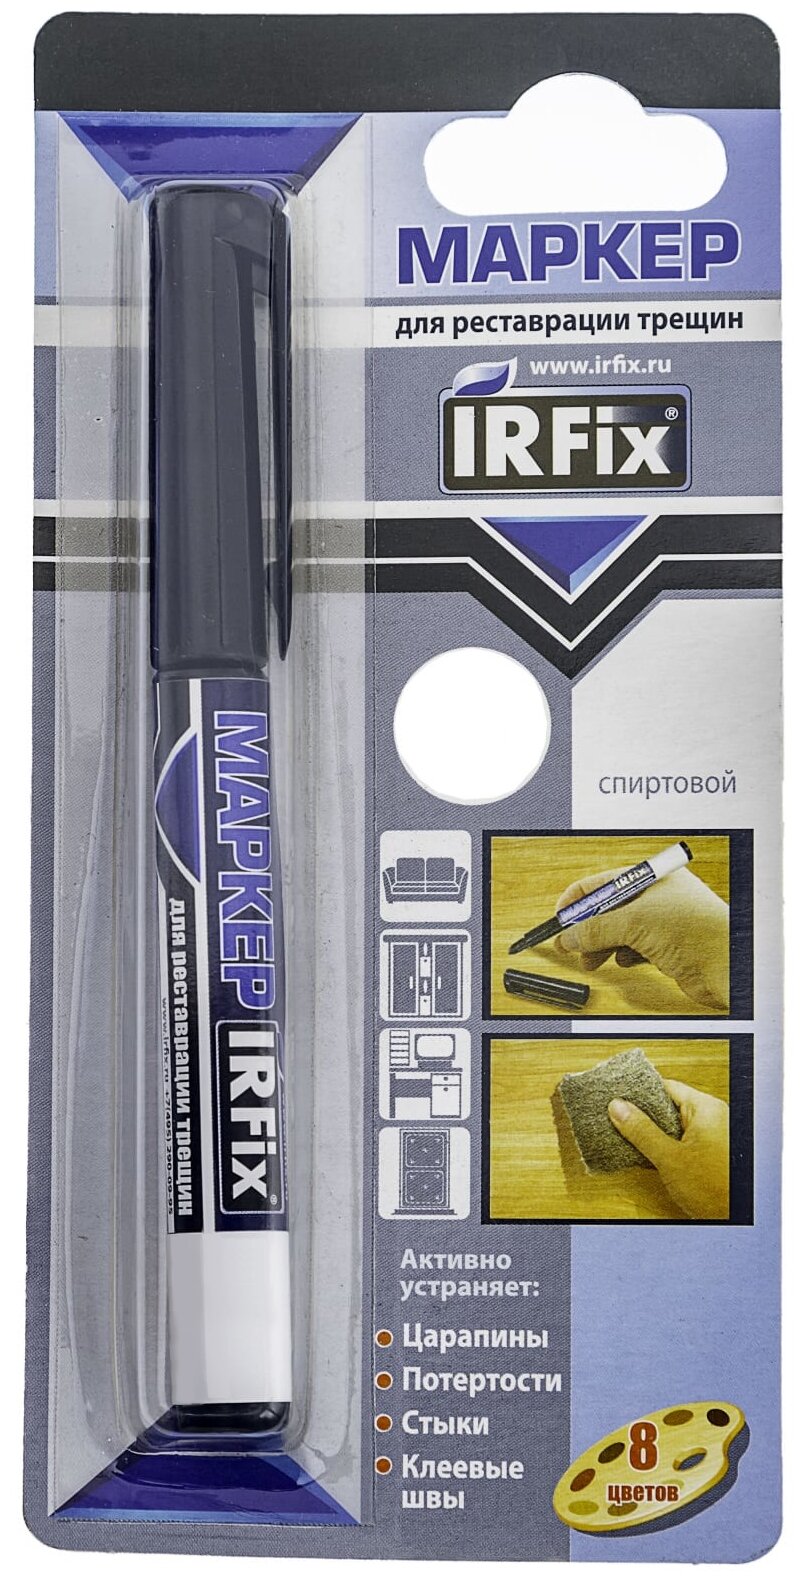 IRFix маркер для реставрации трещин